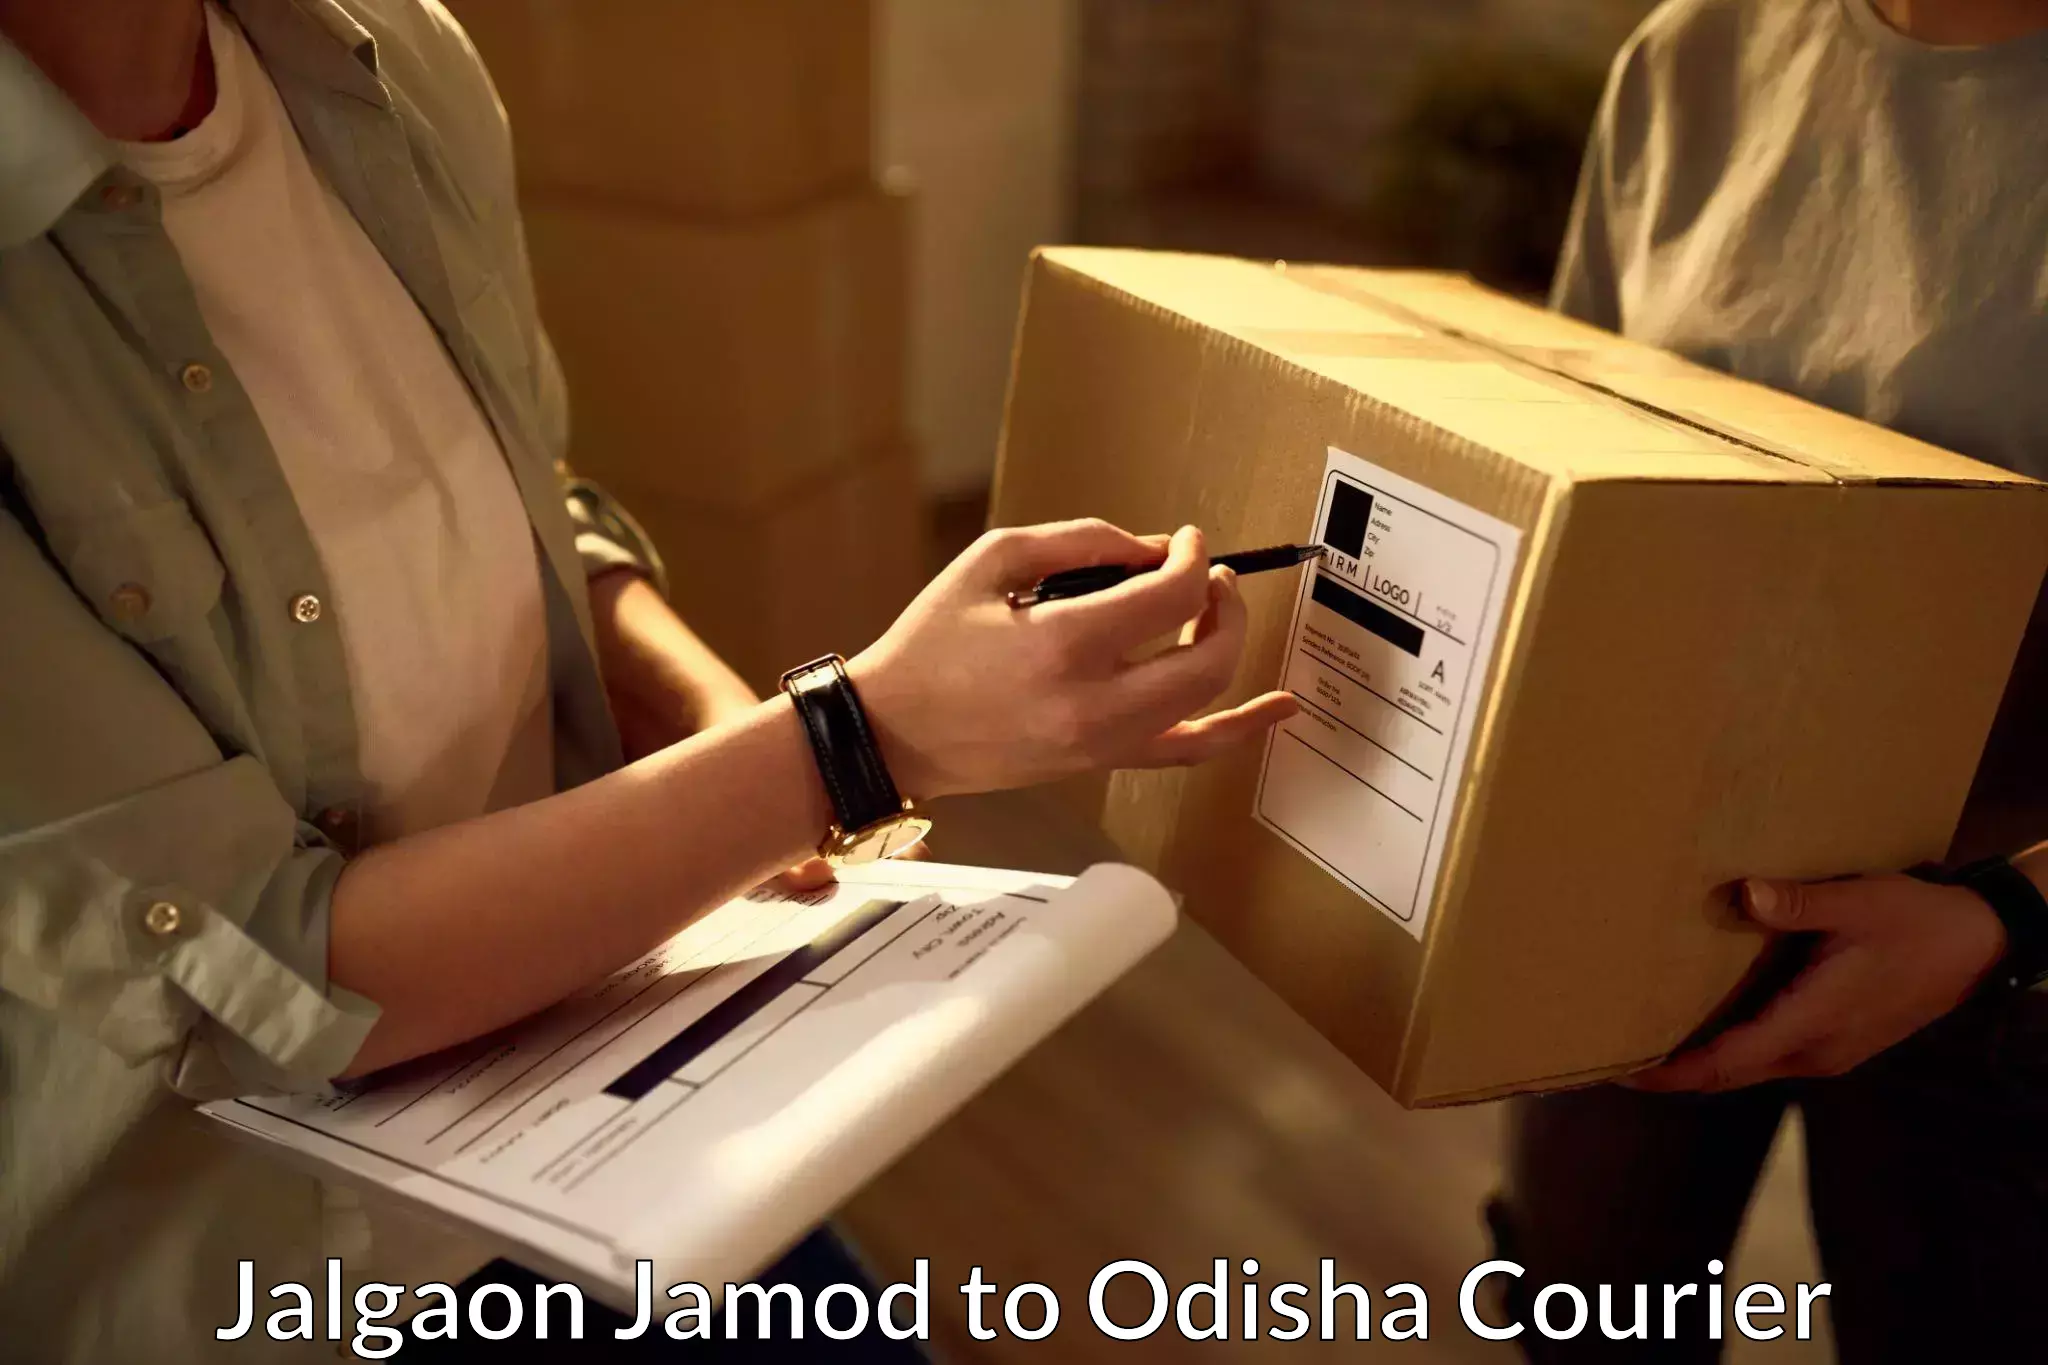 On-call courier service Jalgaon Jamod to Morada